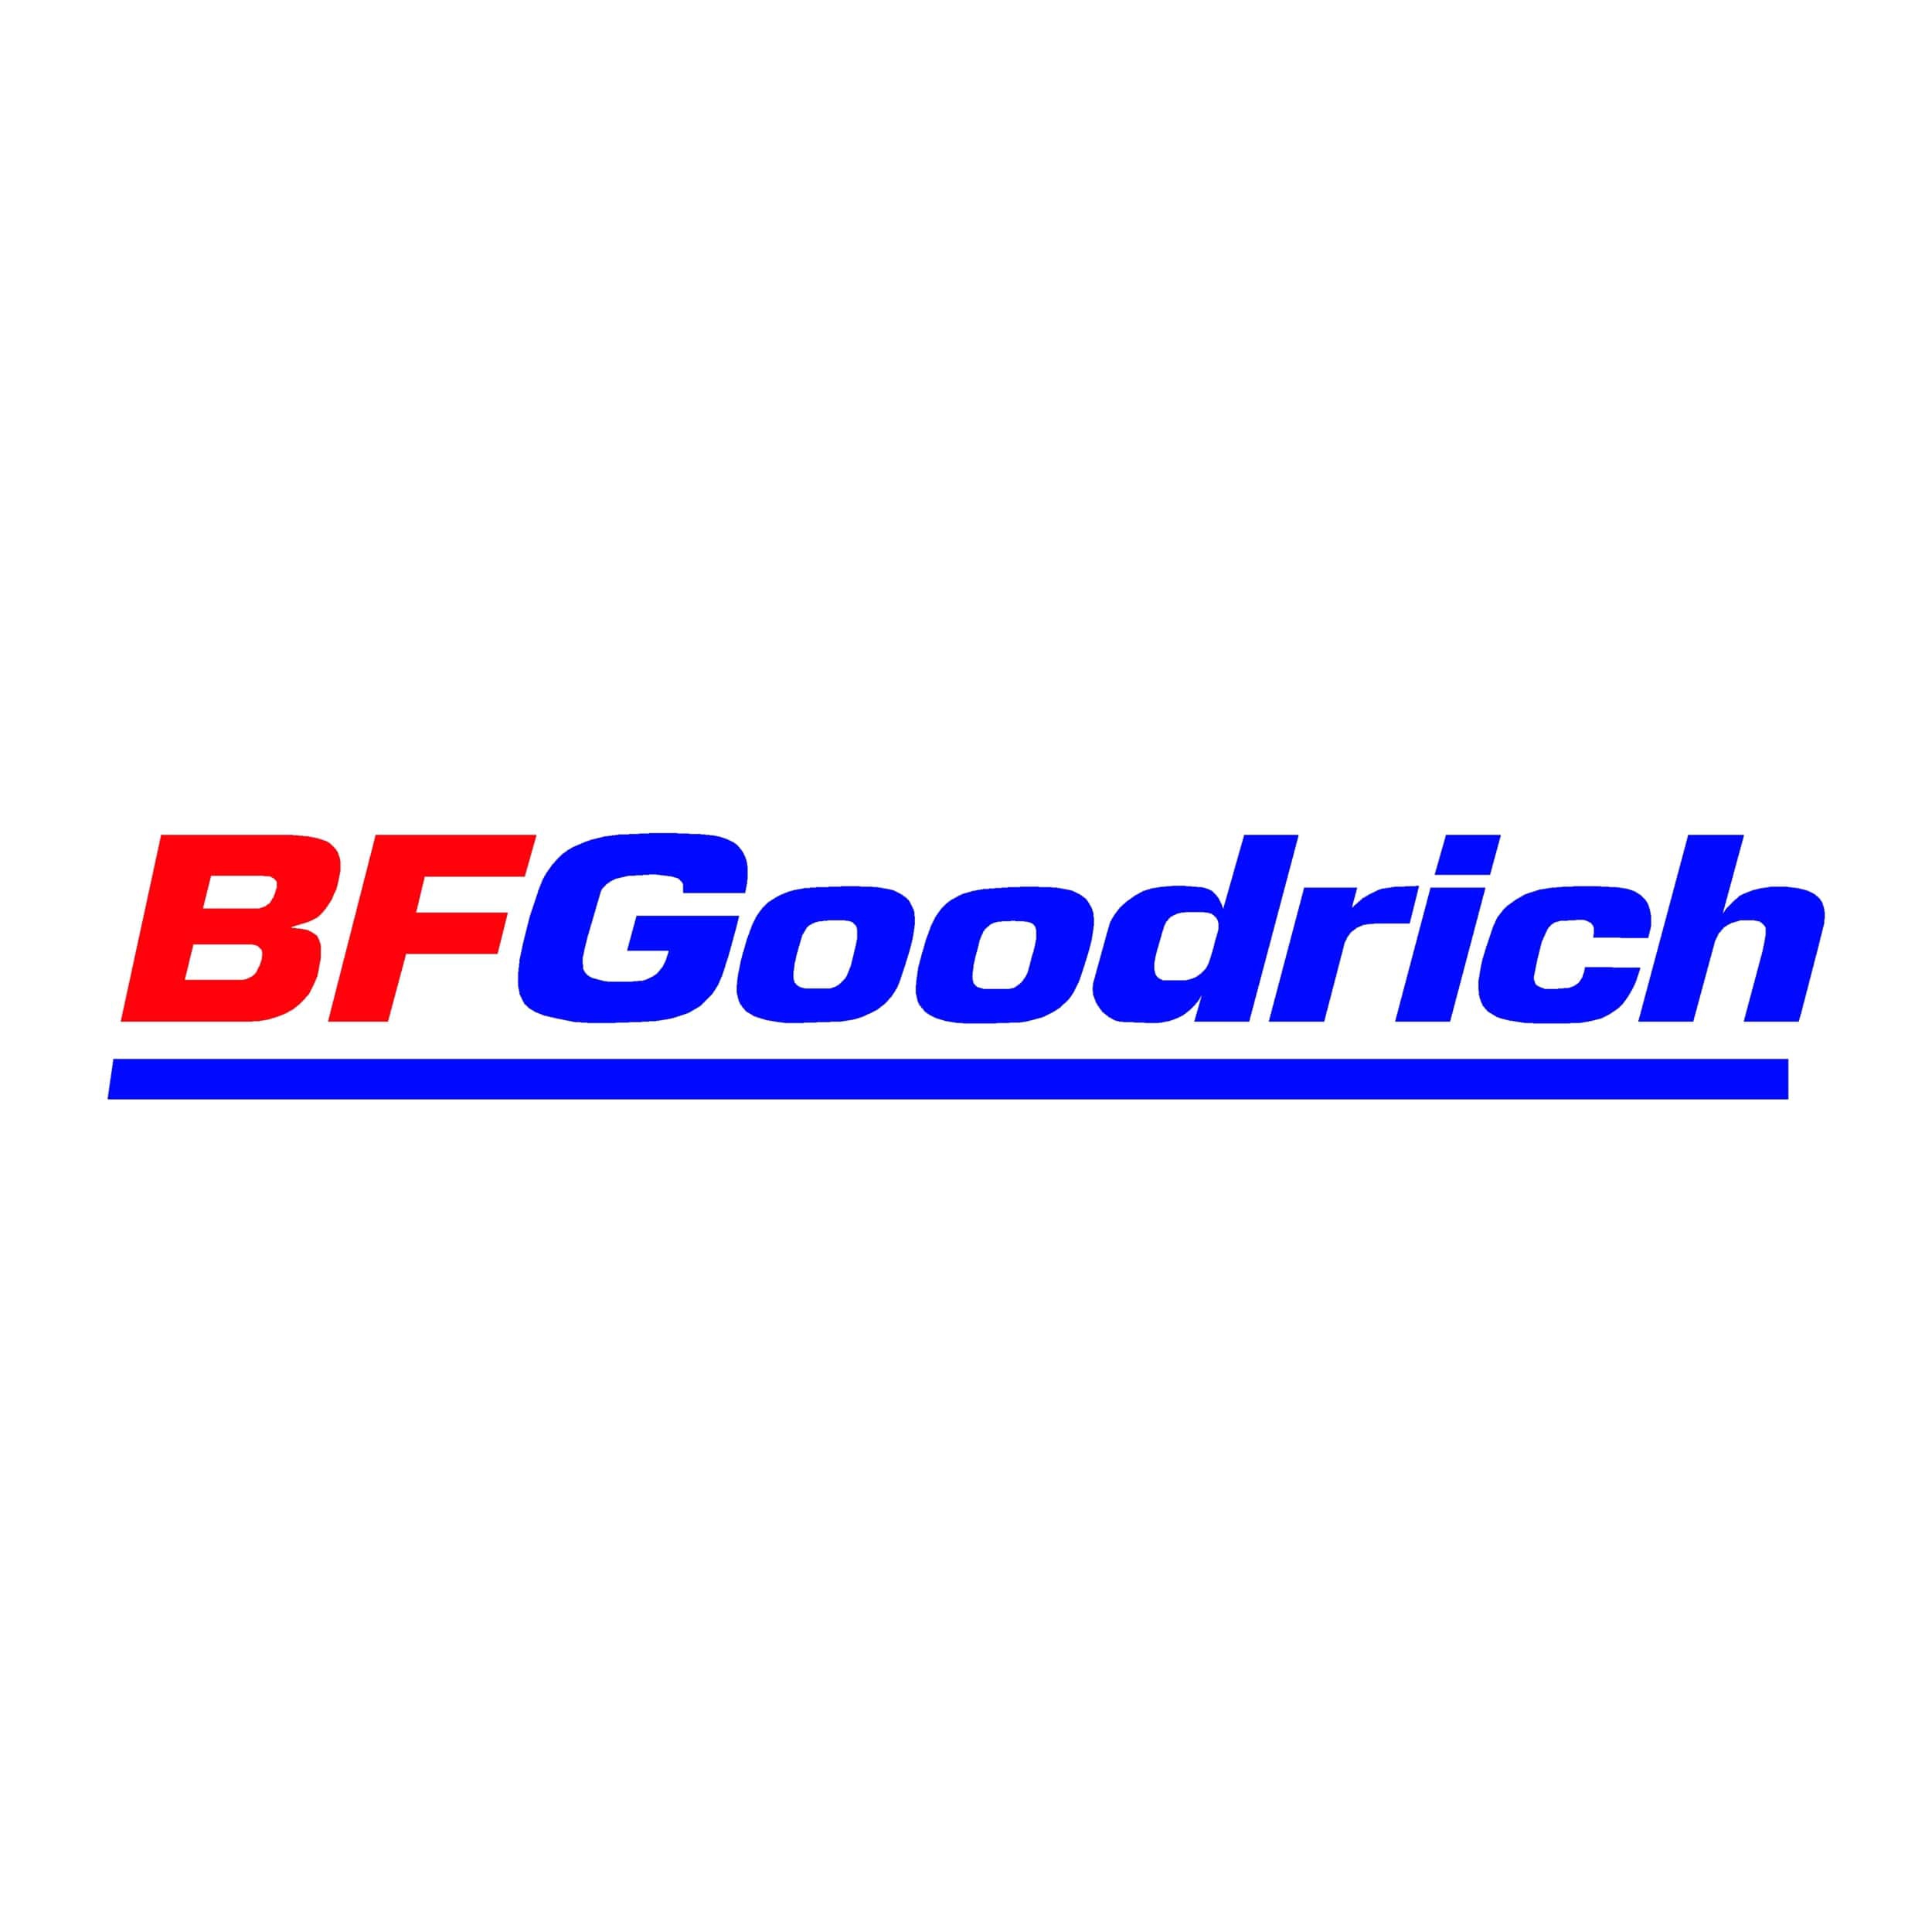 stickers-bf-goodrich-ref-1-tuning-audio-sonorisation-car-auto-moto-camion-competition-deco-rallye-autocollant-min